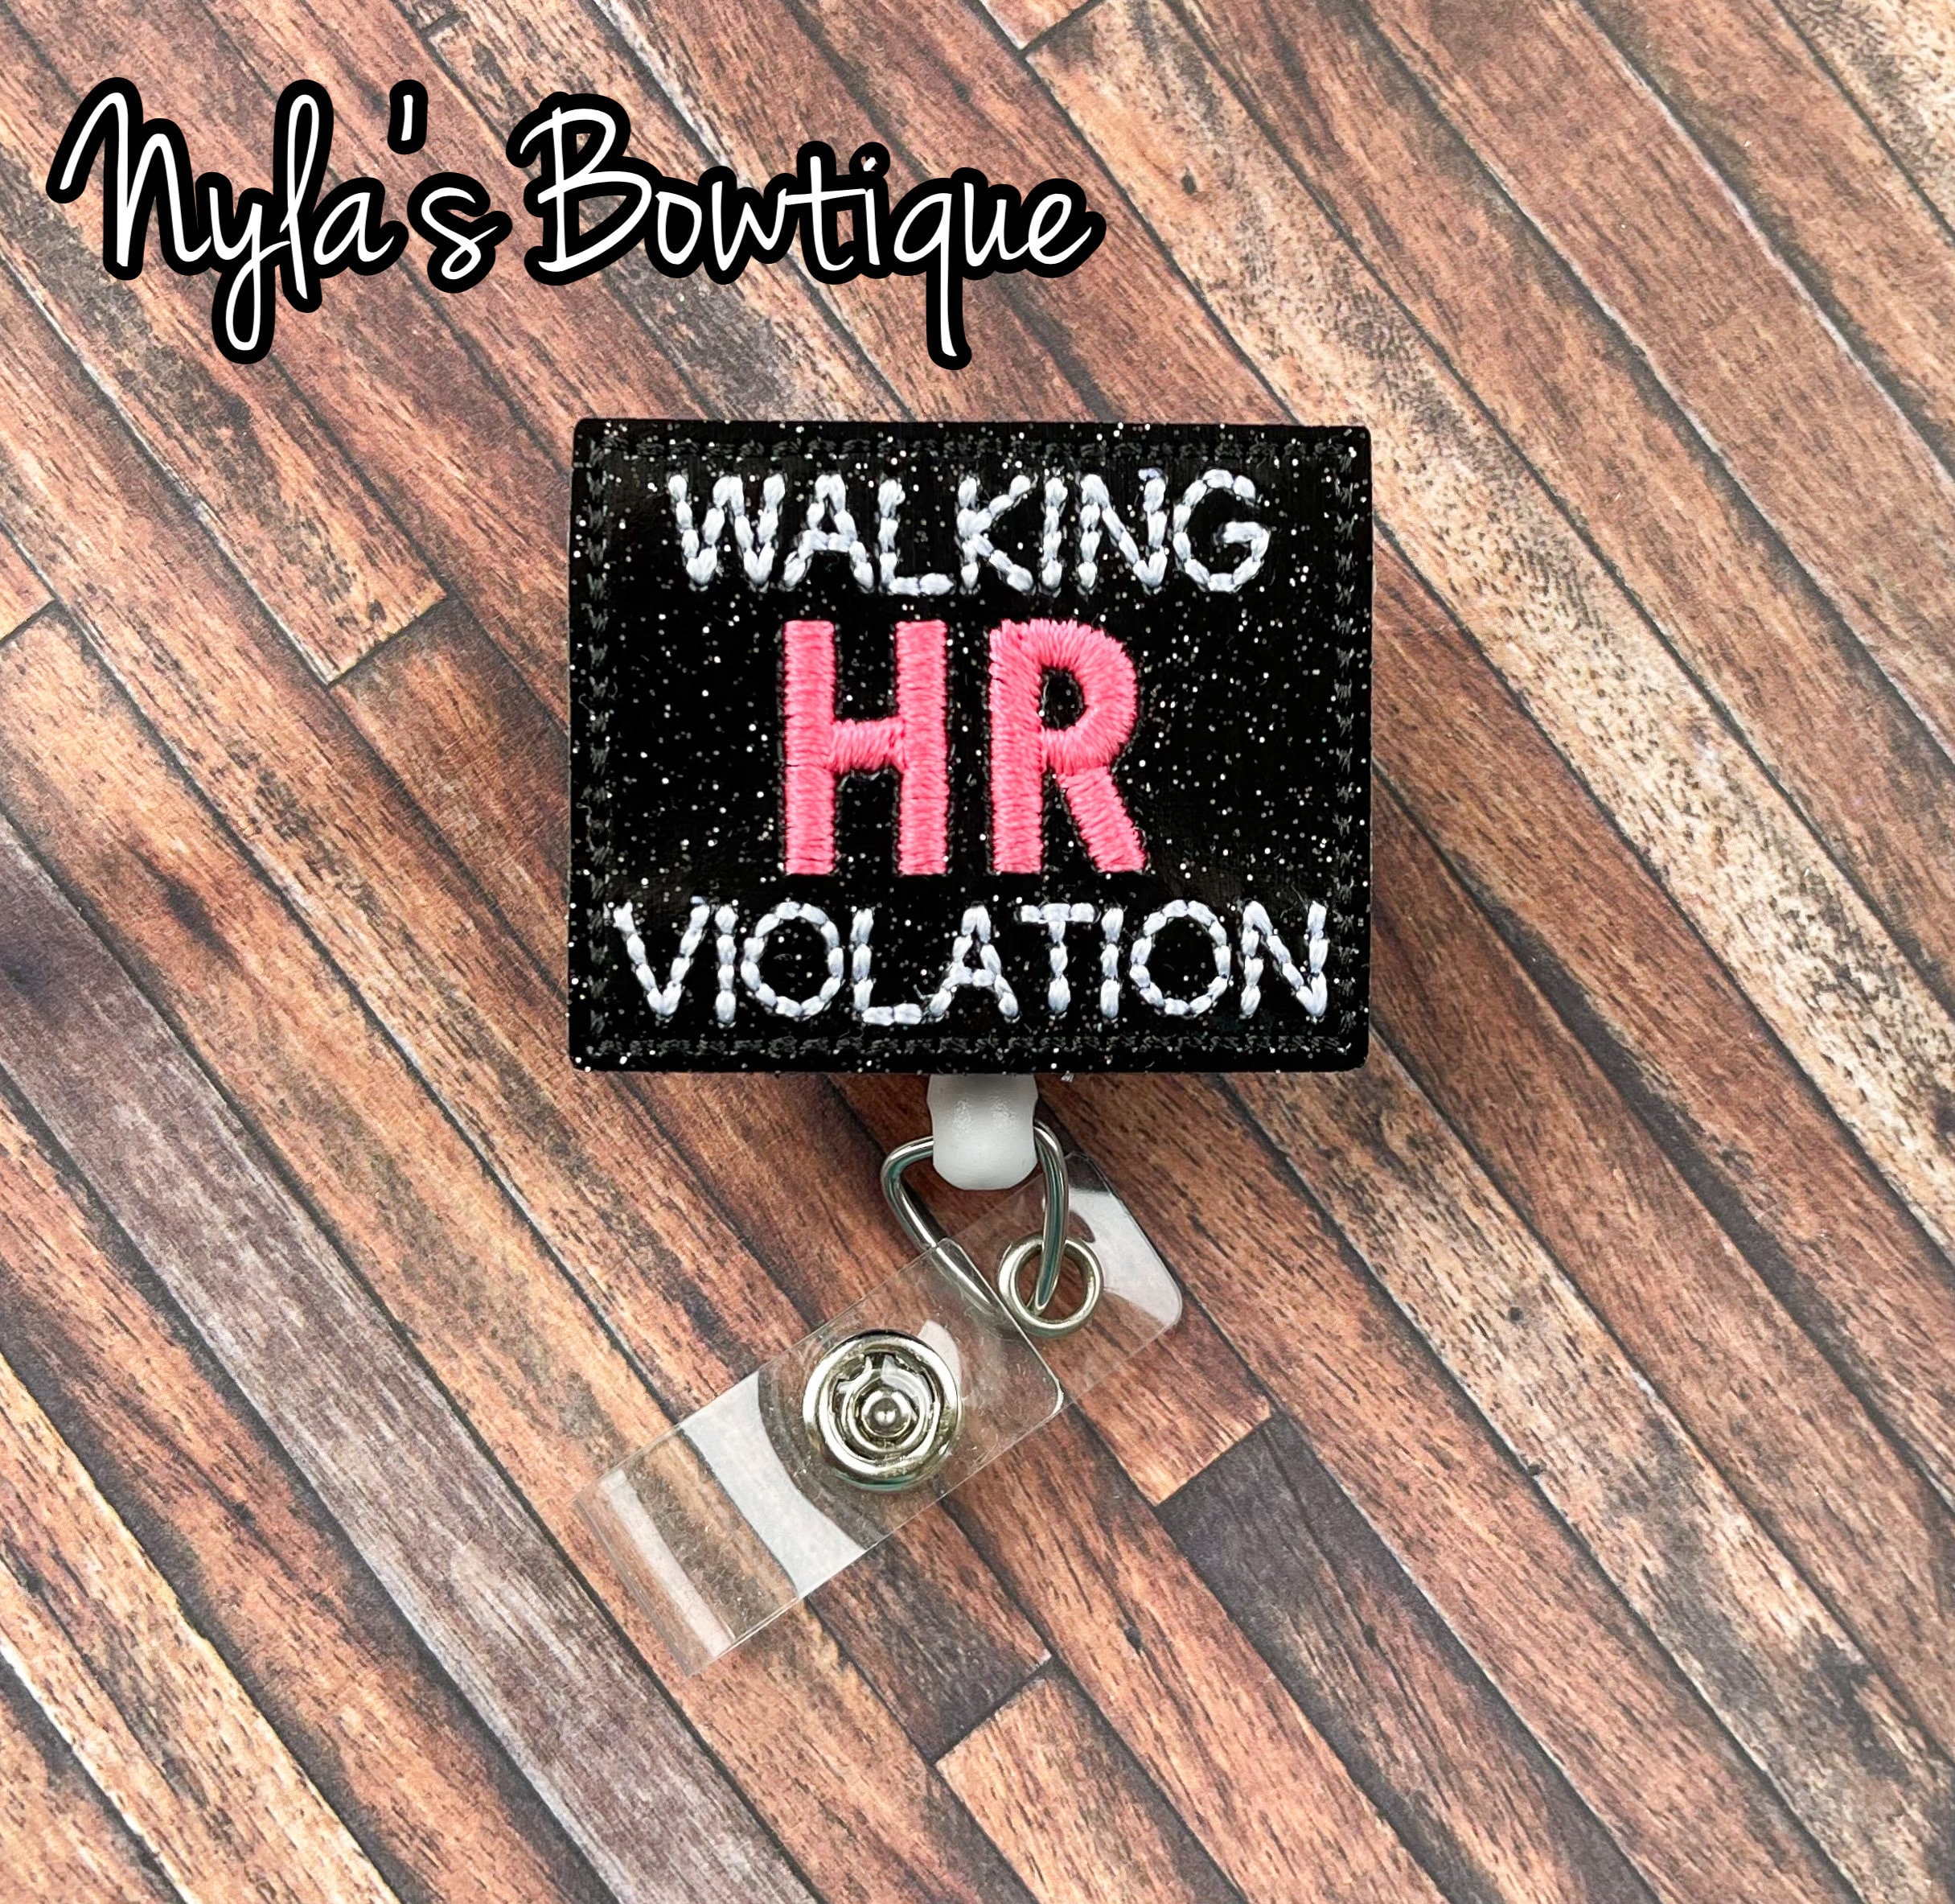 Walking HR Violation Badge Reel, Nurse Badge Reel, Funny Badge Reel, Retractable  ID Badge Holder, Work Badge, Admin ID Badge, Name Tag Badge 